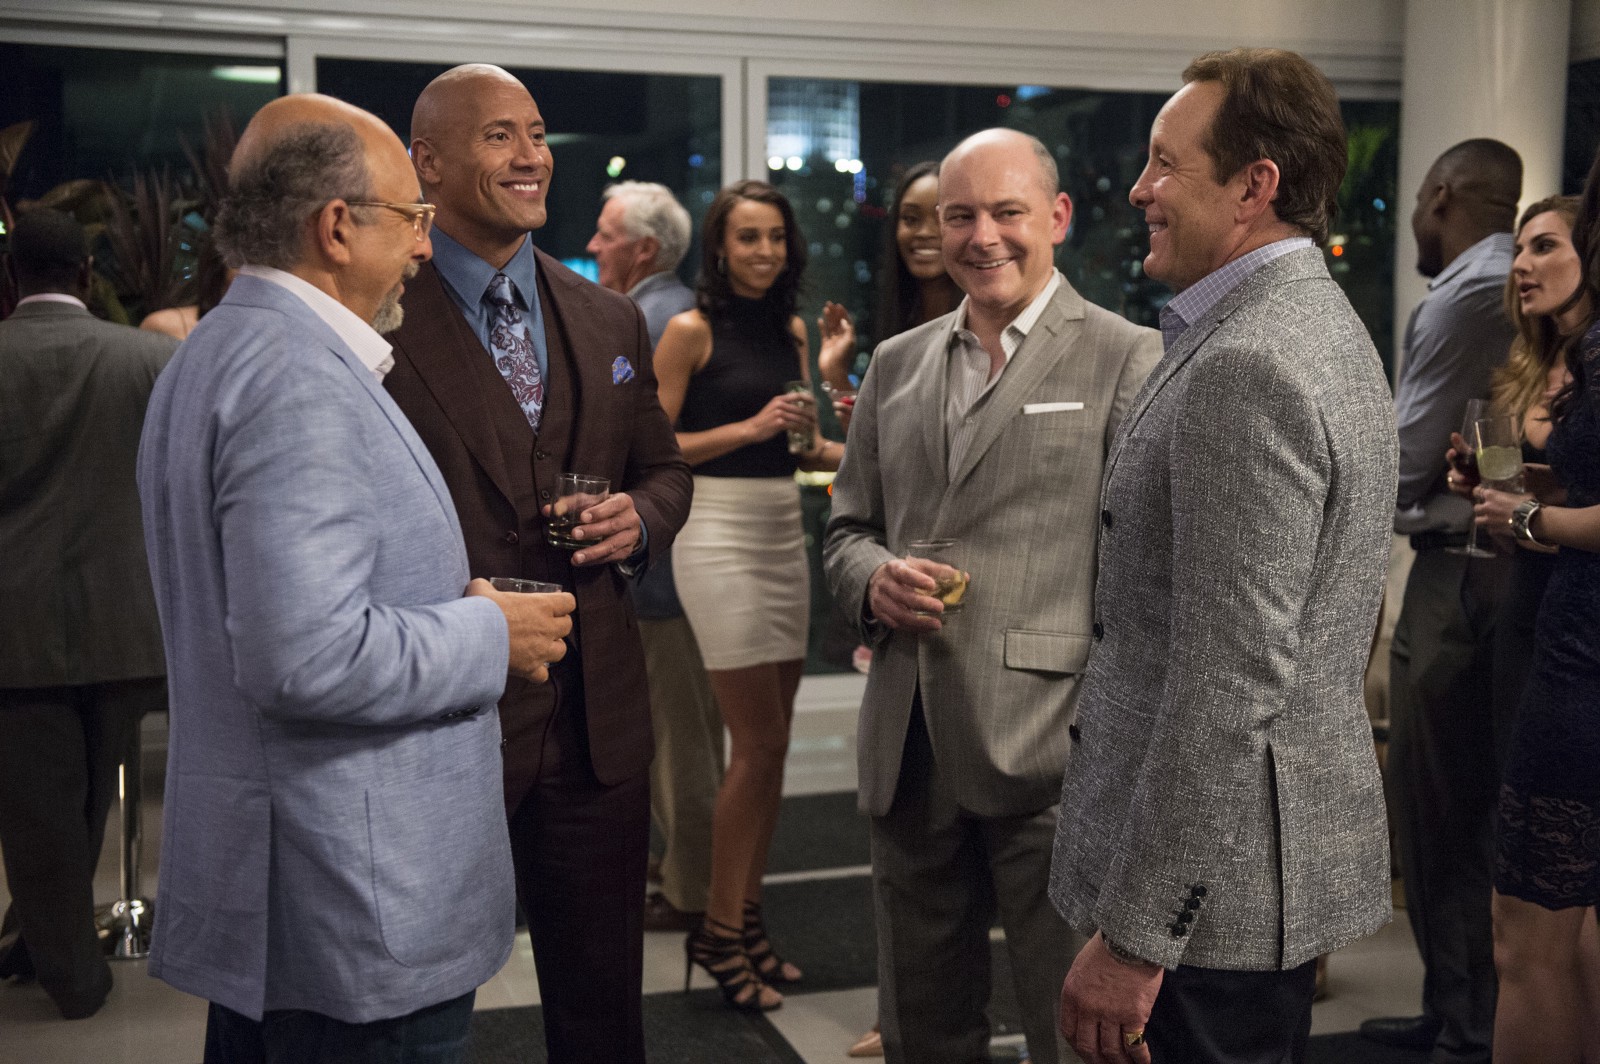      Ballers: Richard Schiff, Dwayne Johnson, Rob Corddry, Steve Guttenberg   image - Jeff Daly/HBO 